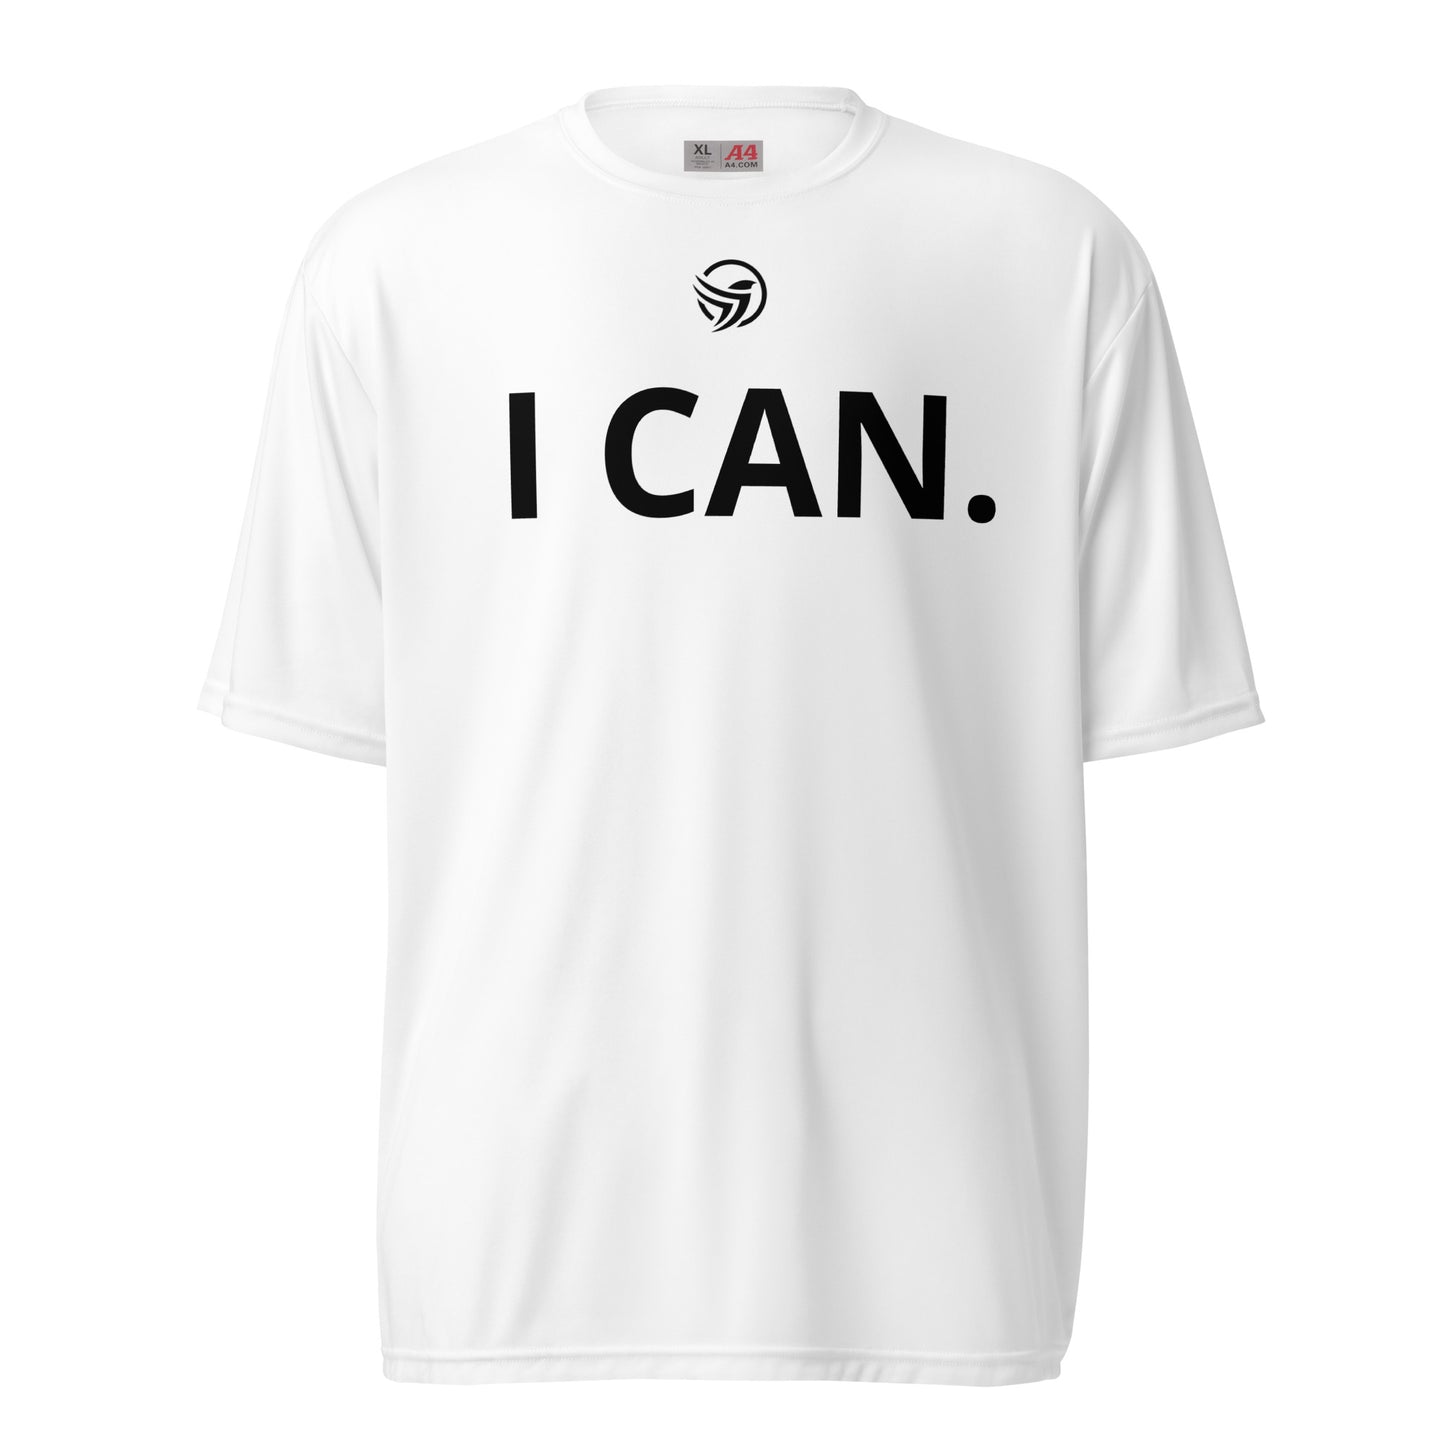 I CAN. Unisex Dri-fit Shirt